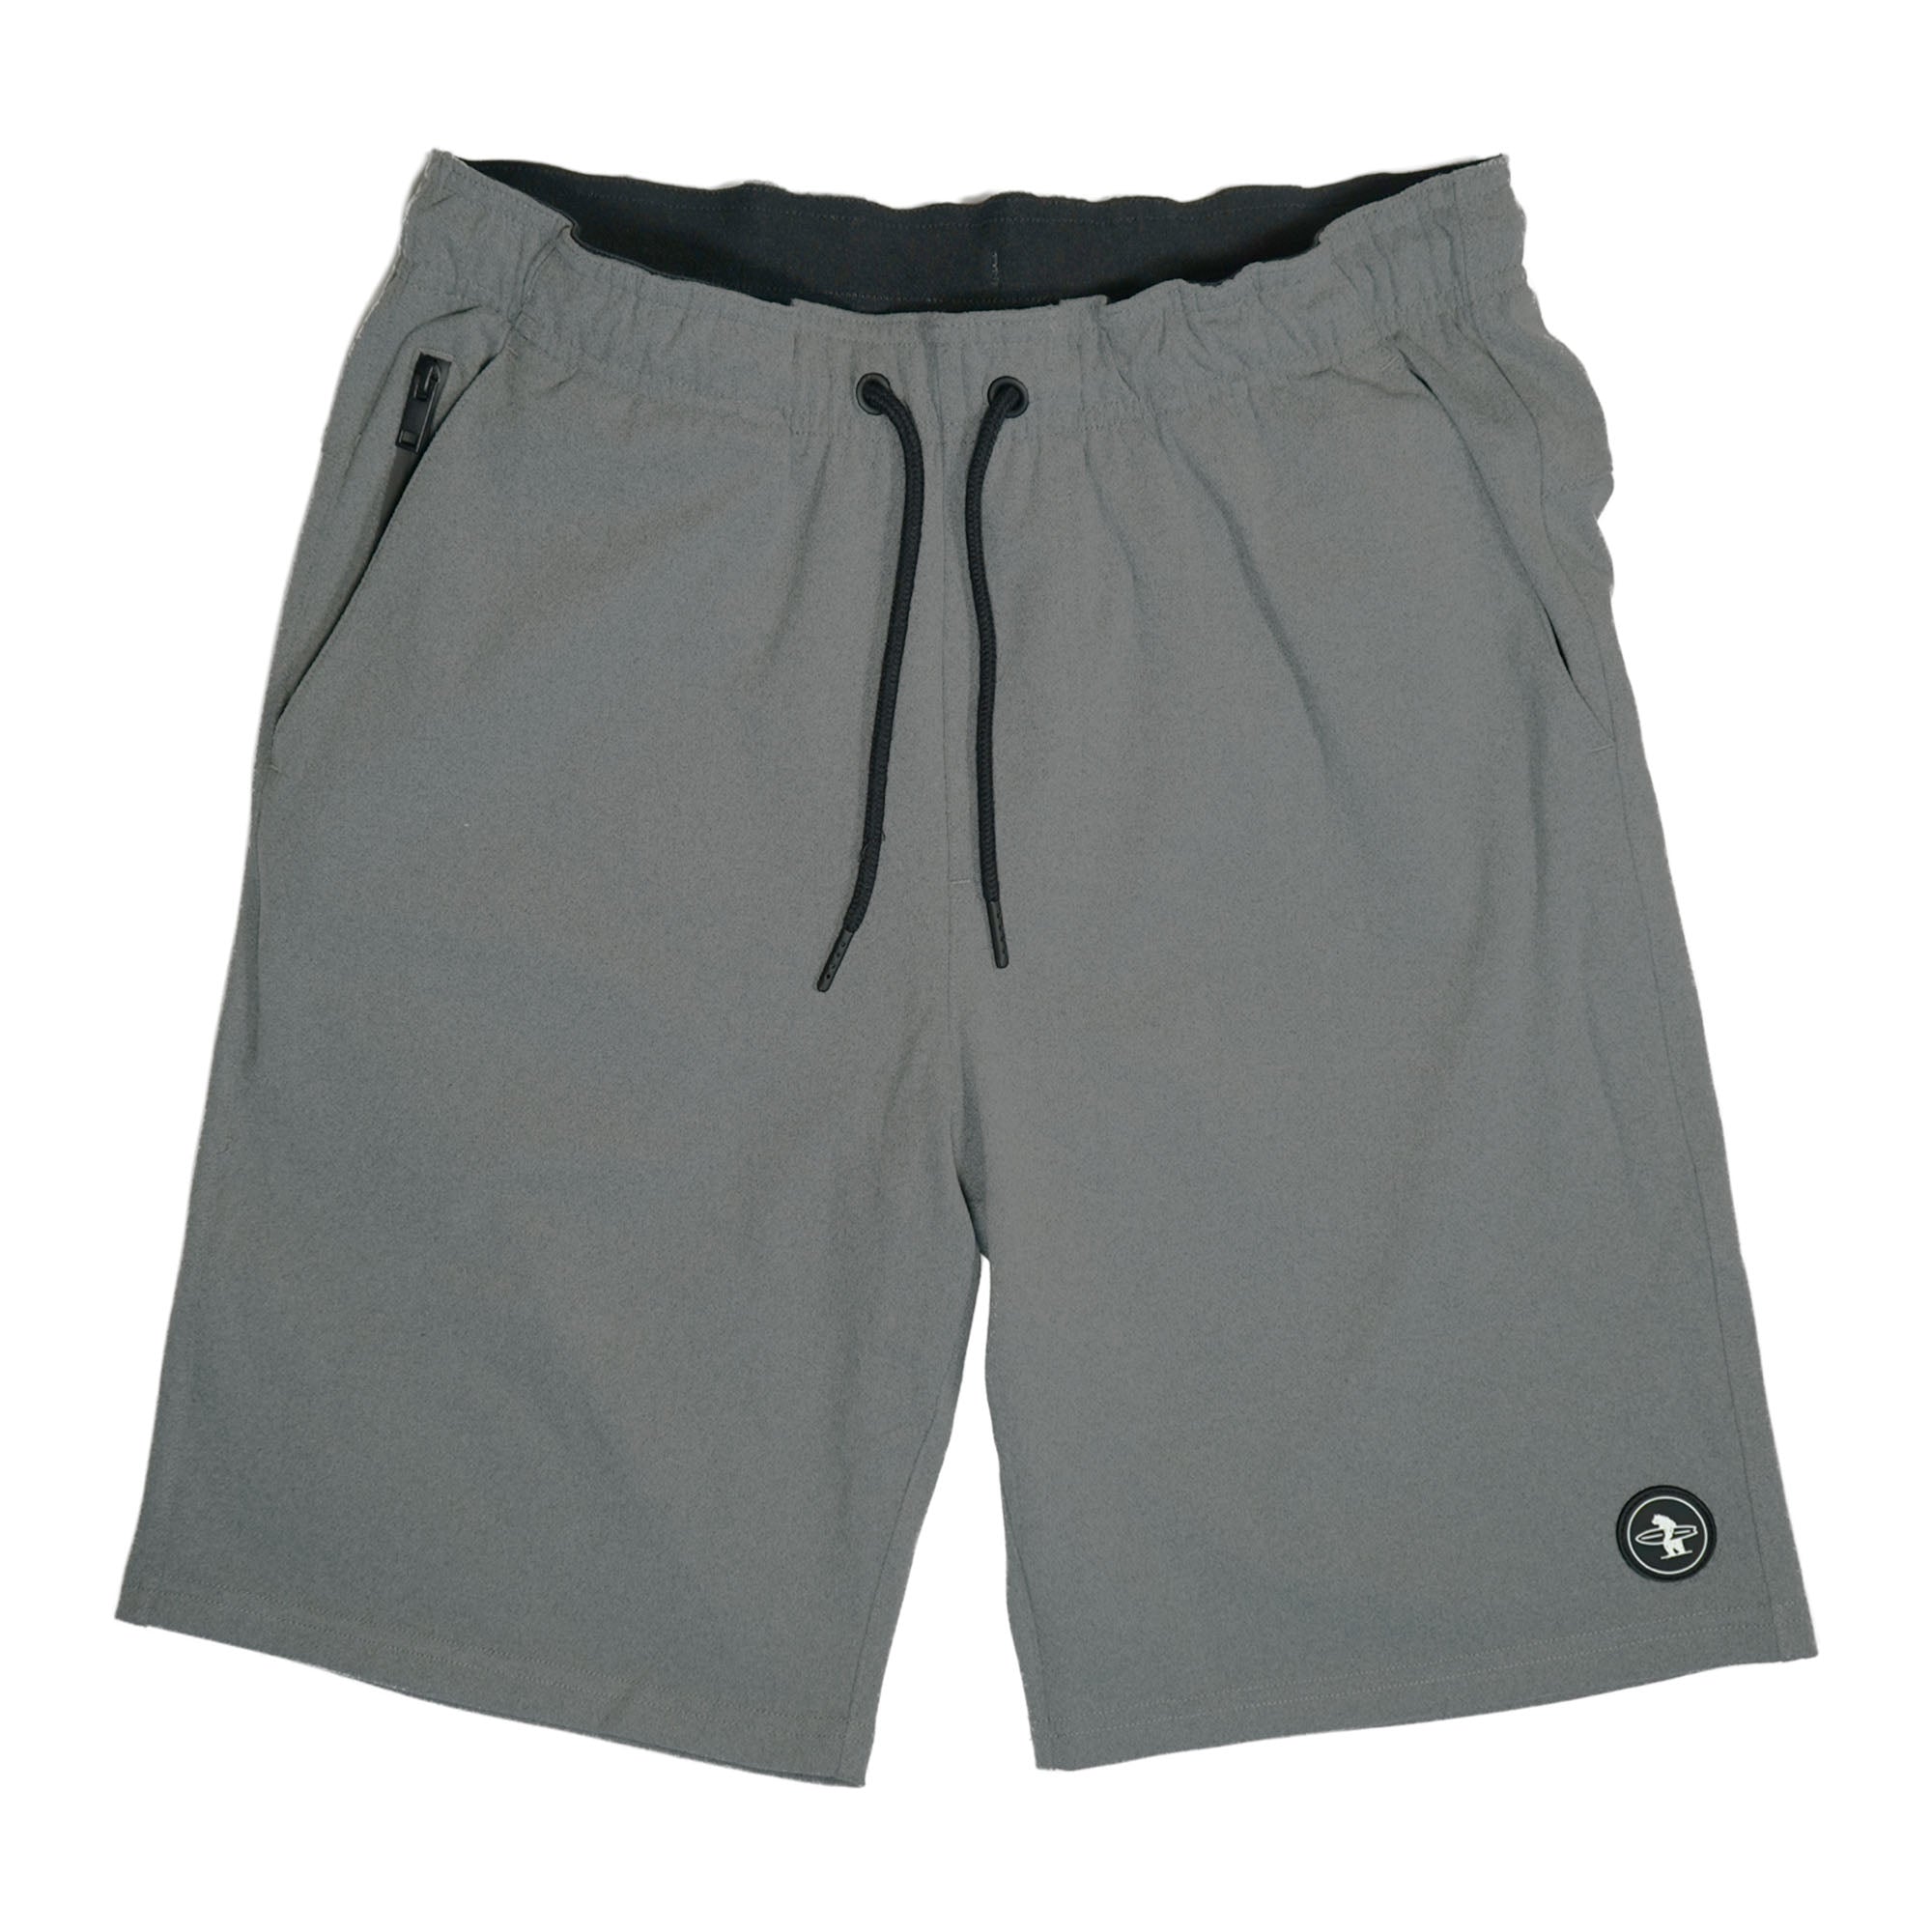 Lazy Daze Grey Shorts front facing